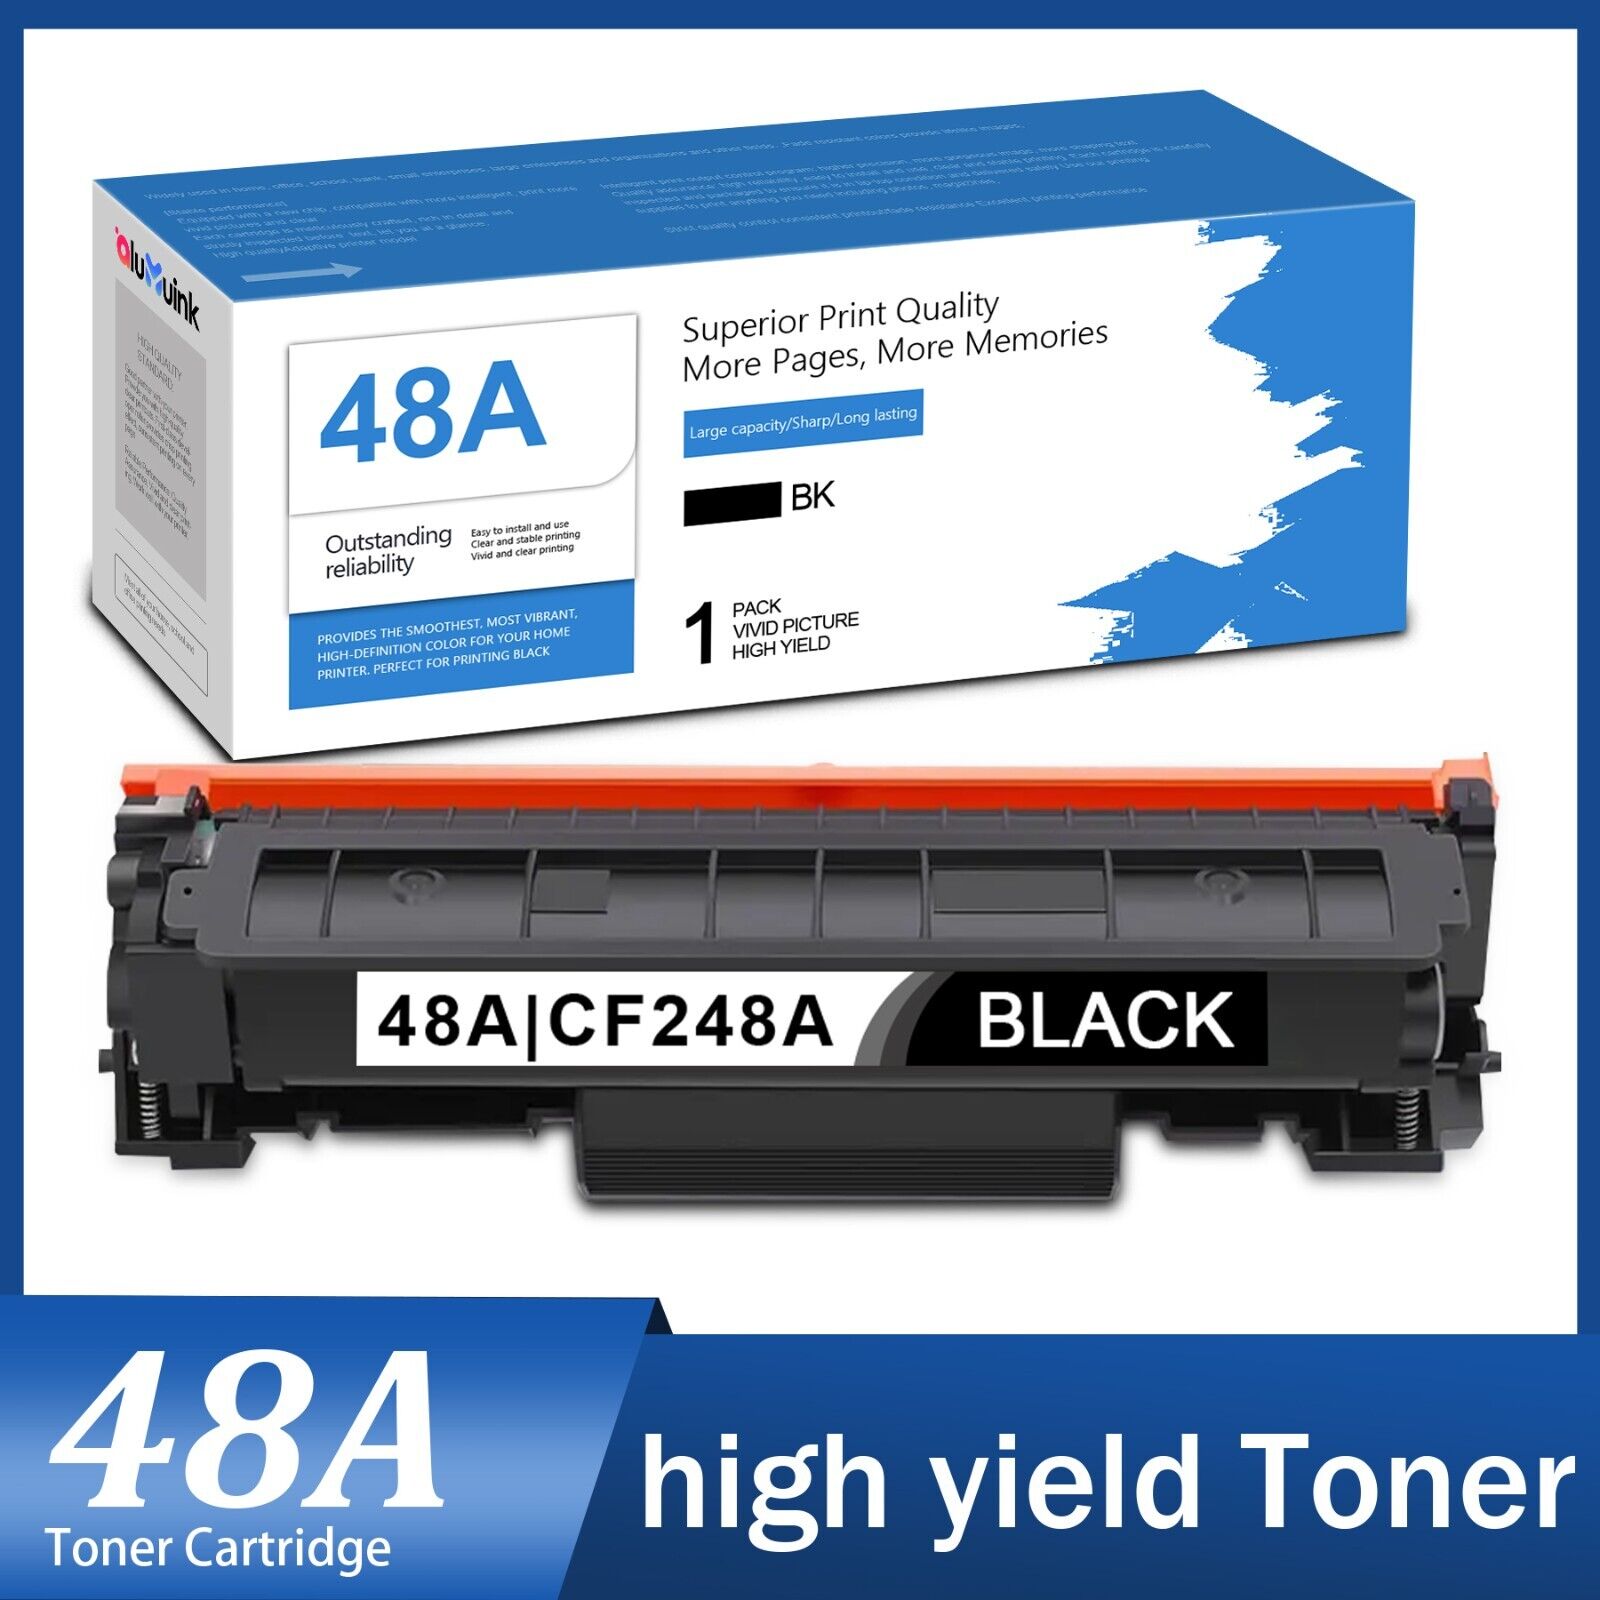 48A CF248A Black Toner Cartridge Replacement for HP 48A Toner M15w M15a M16w